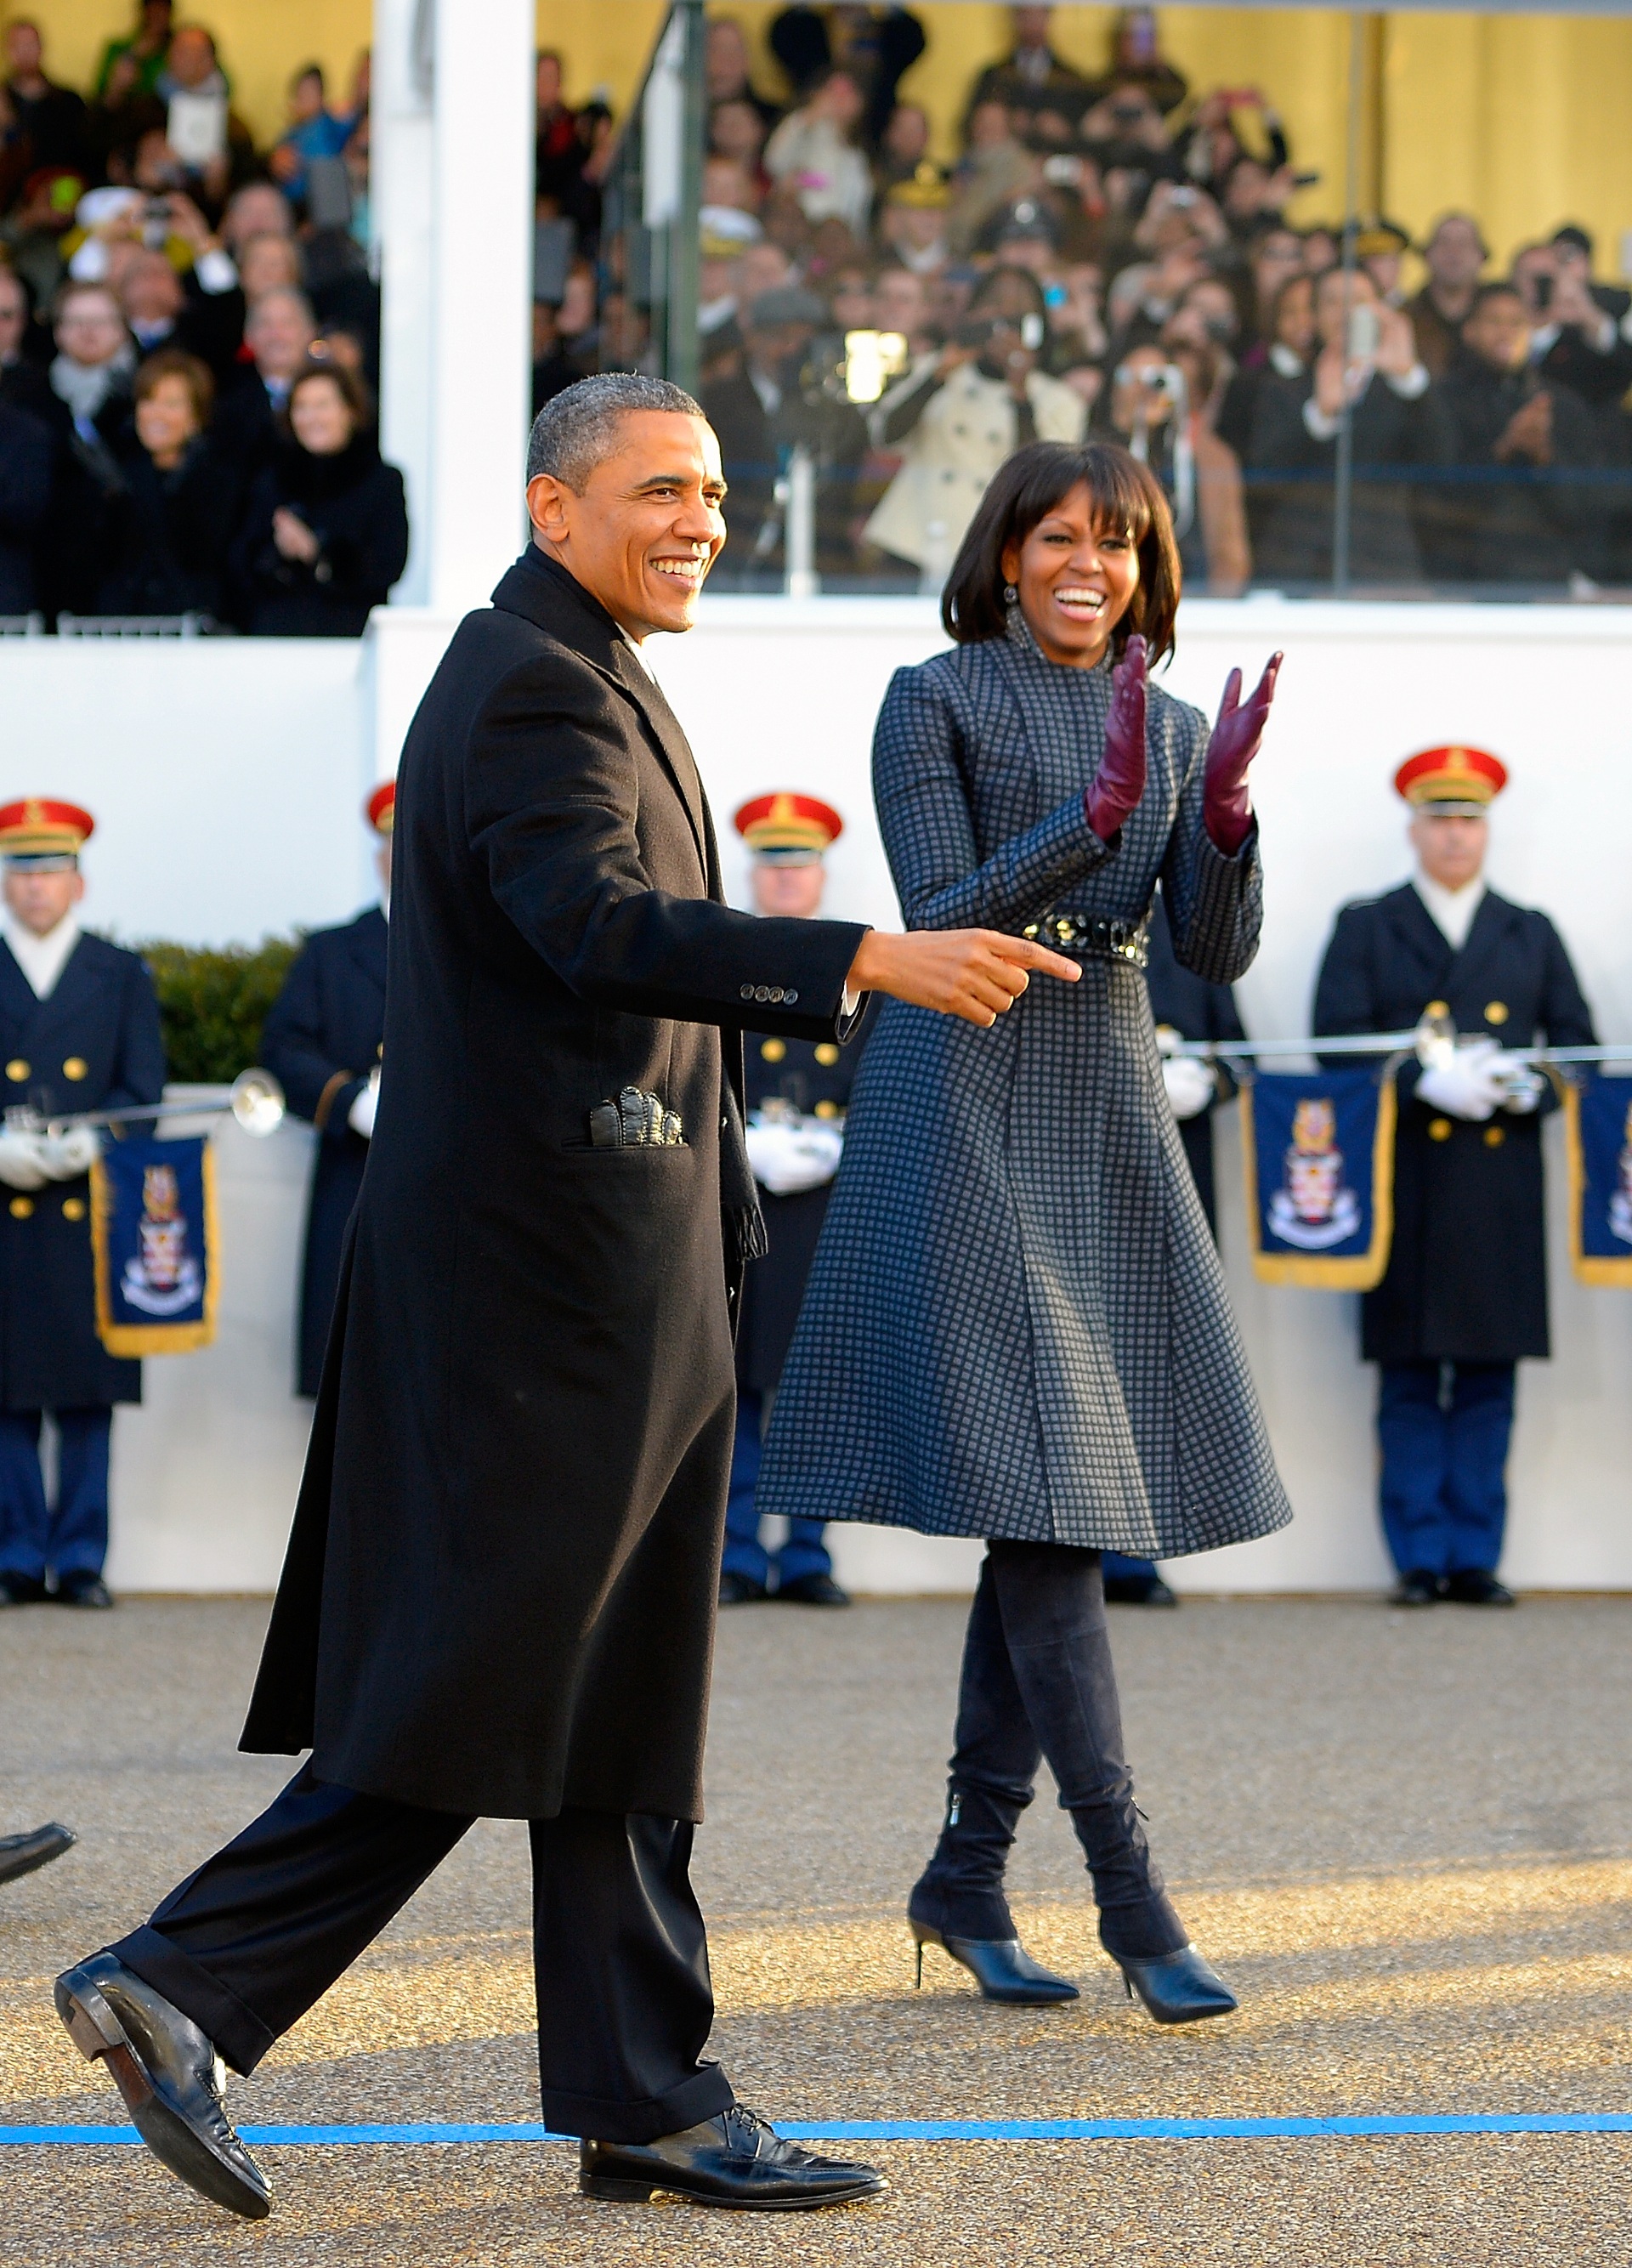 Барак Обама в пальто Brooks Brothers и Мишель Обама в пальто Thom Browne, сапогах Reed Krakoff и поясе J. Crew,&nbsp;инаугурационный парад, 2013 год&nbsp;